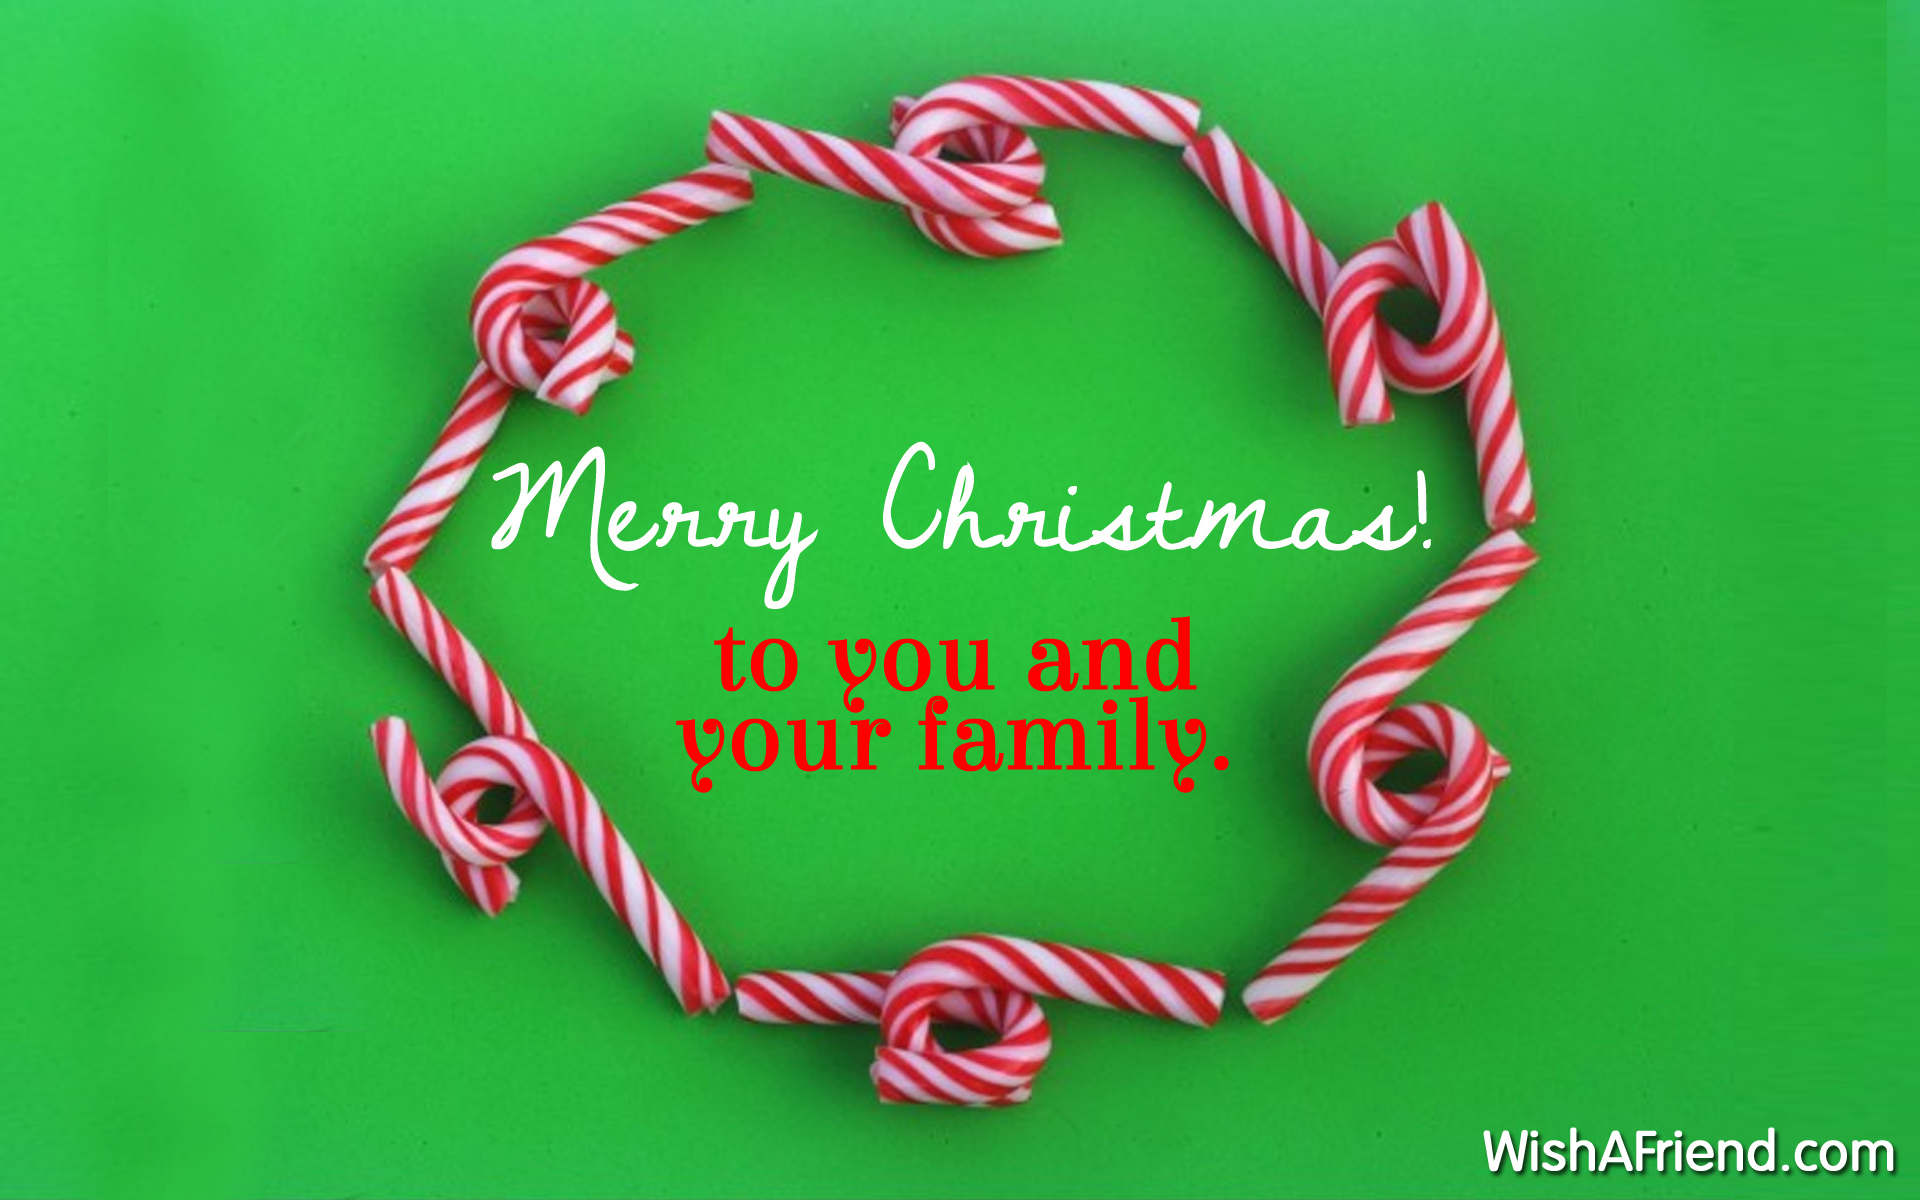 Merry Christmas! to you and